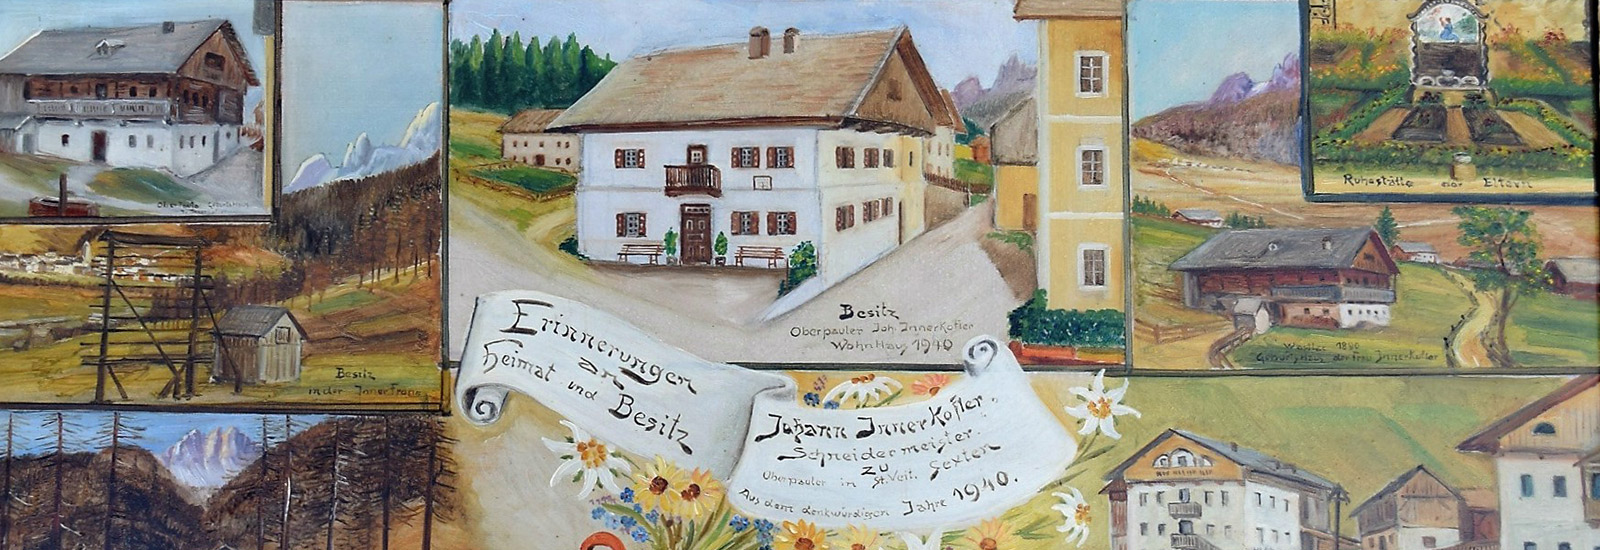 House Oberpauler history